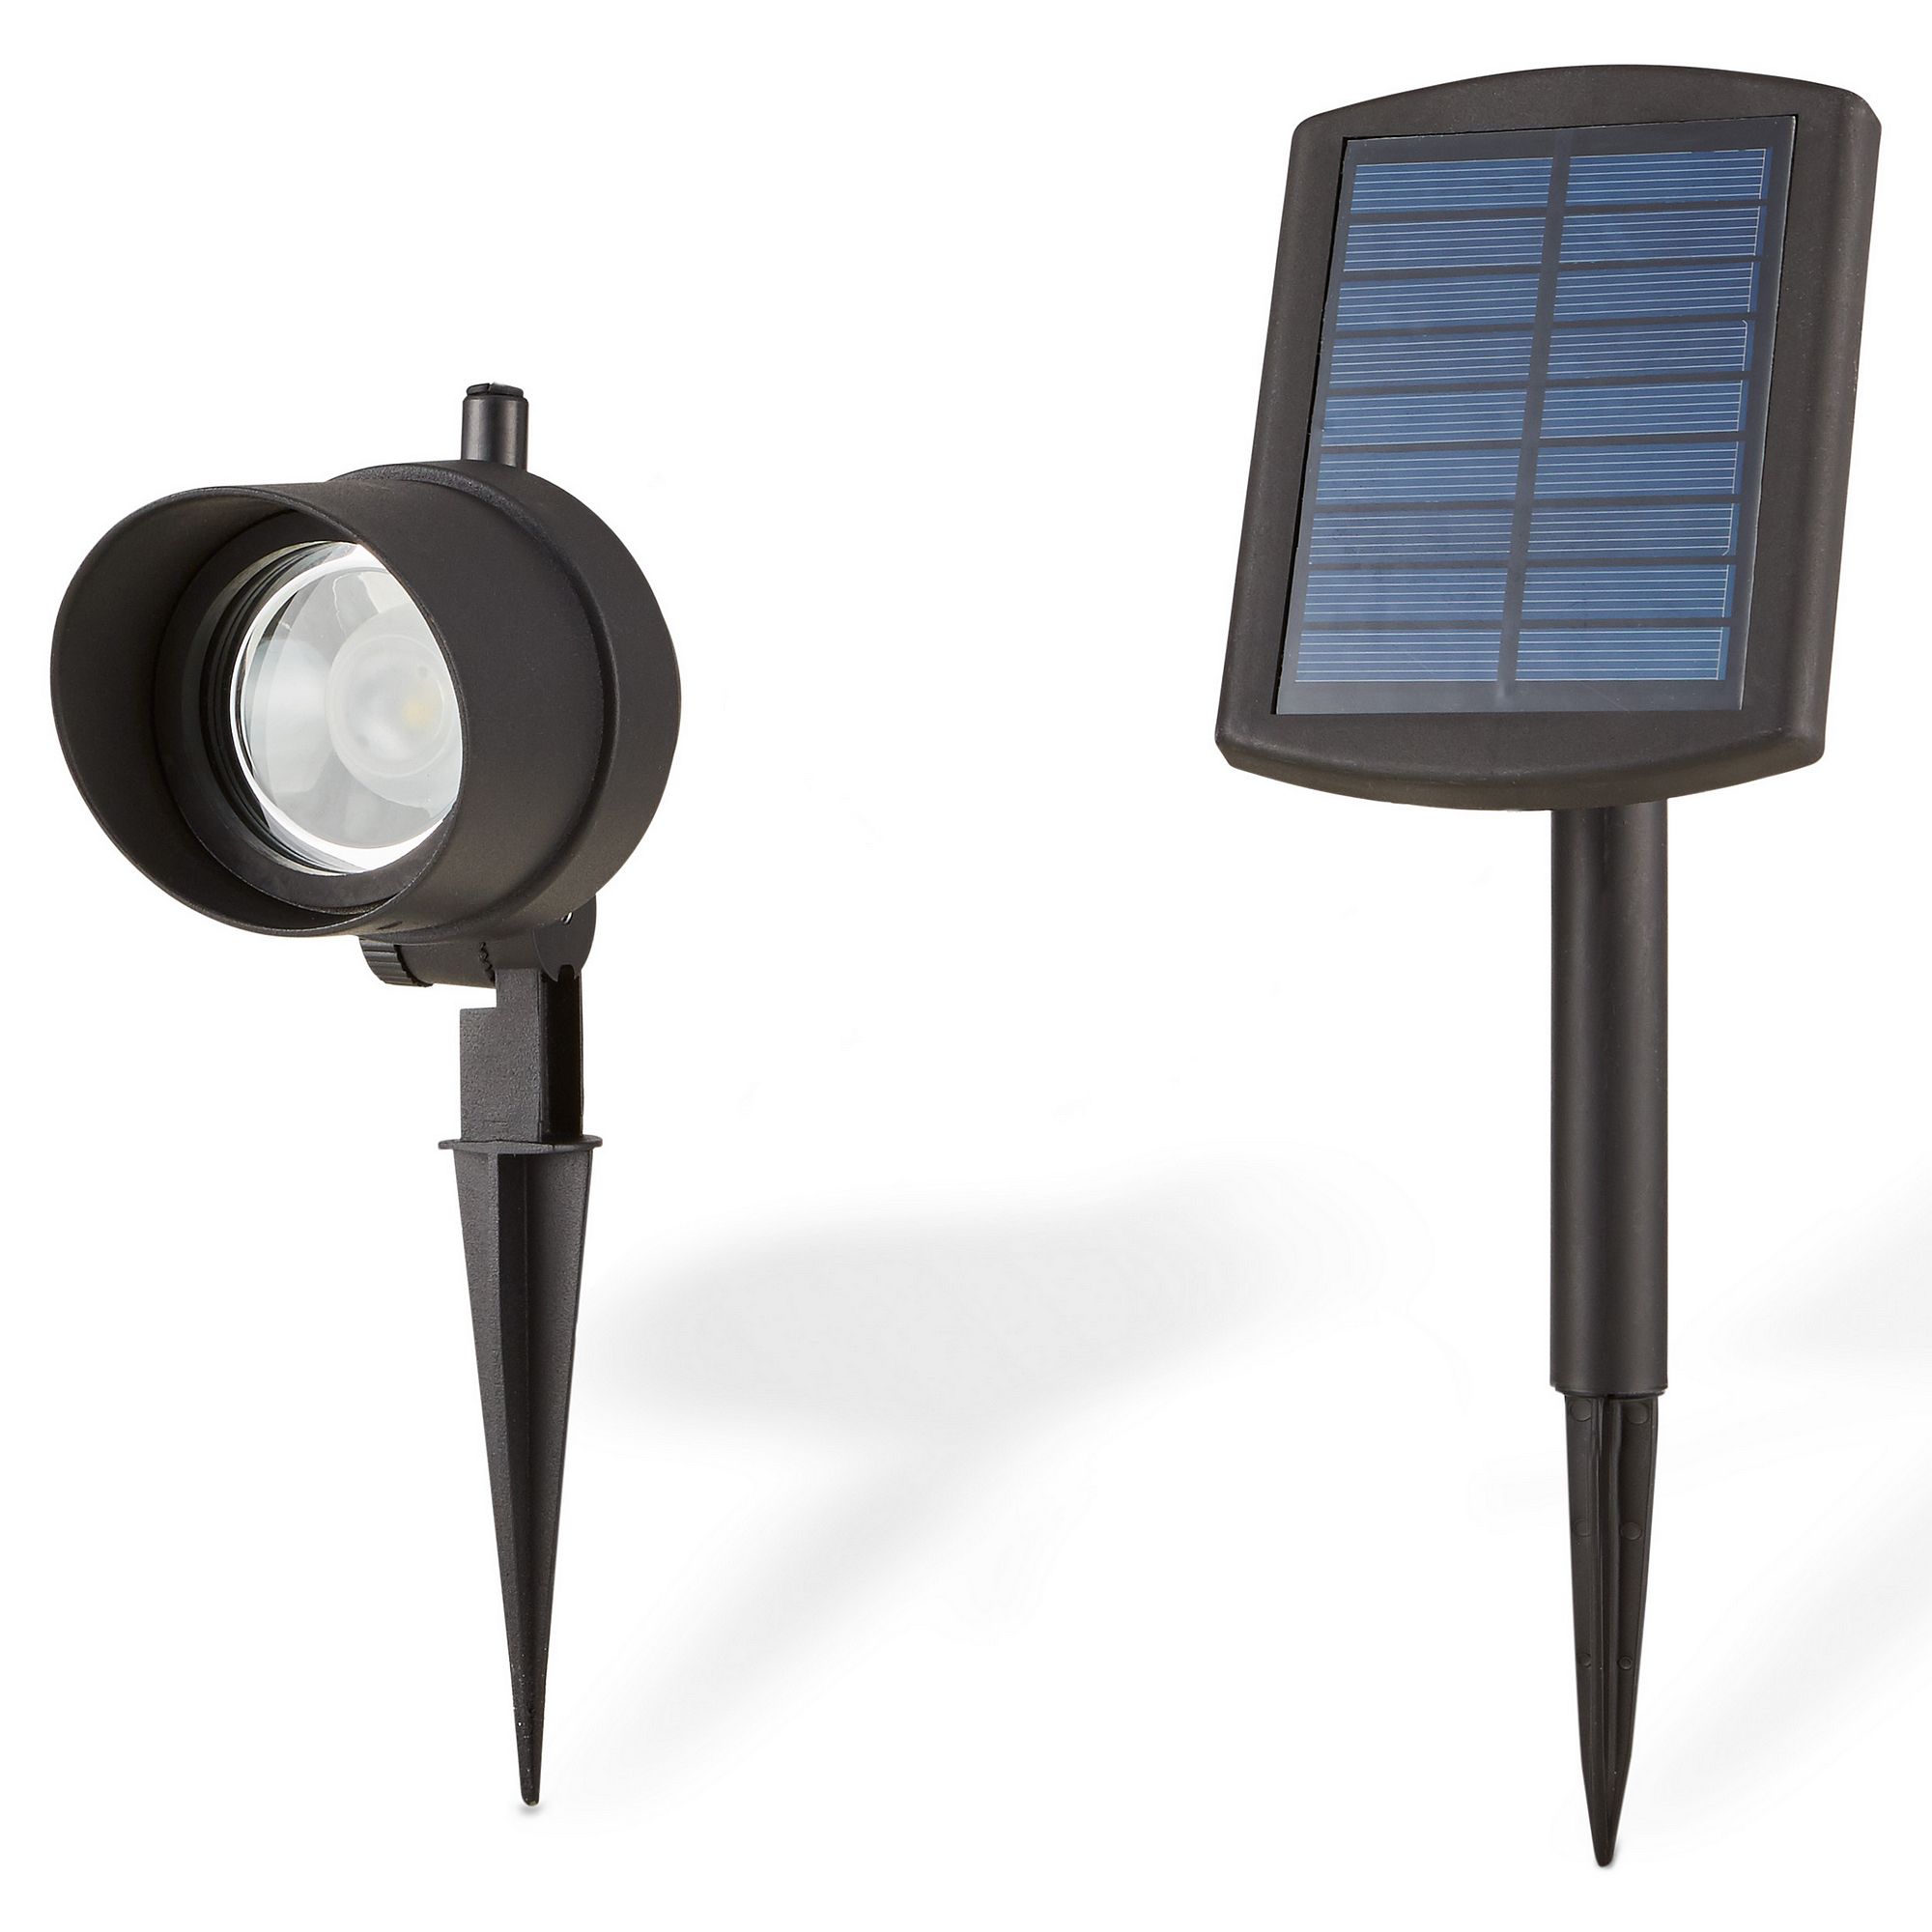 Blooma Bridger Black Solar-powered LED Outdoor Spike light